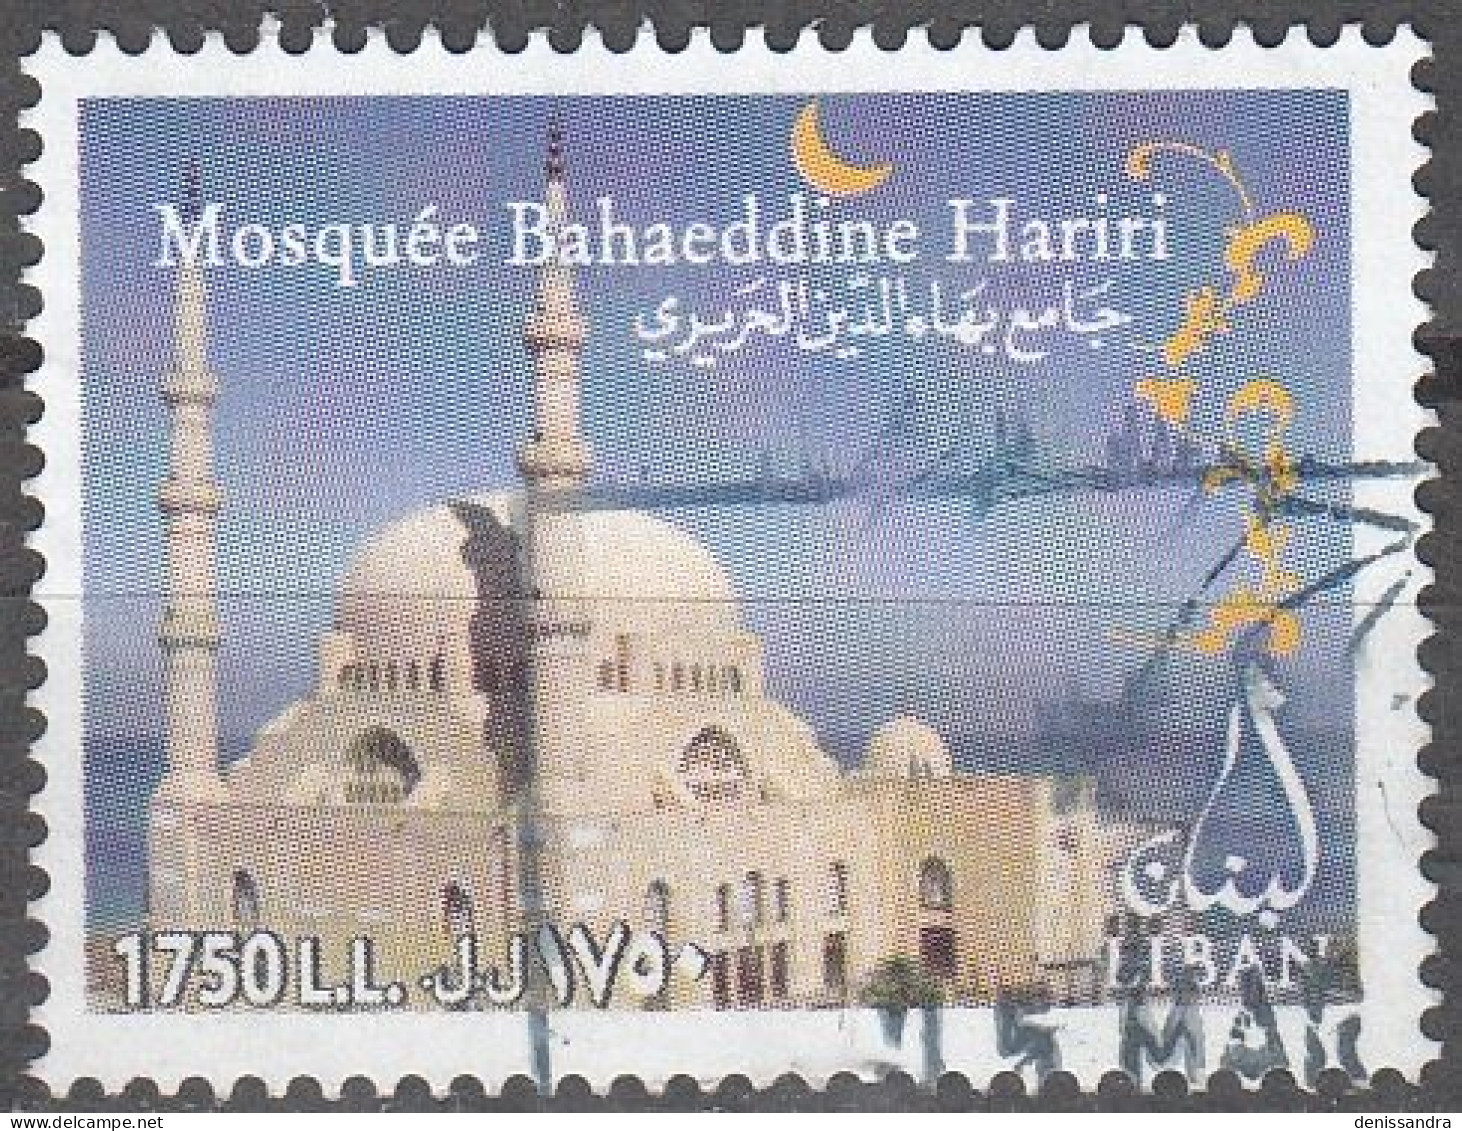 Liban 2005 Michel 1465 O Cote (2007) 3.50 € Mosquée Bahaeddine Hariri Cachet Rond - Liban